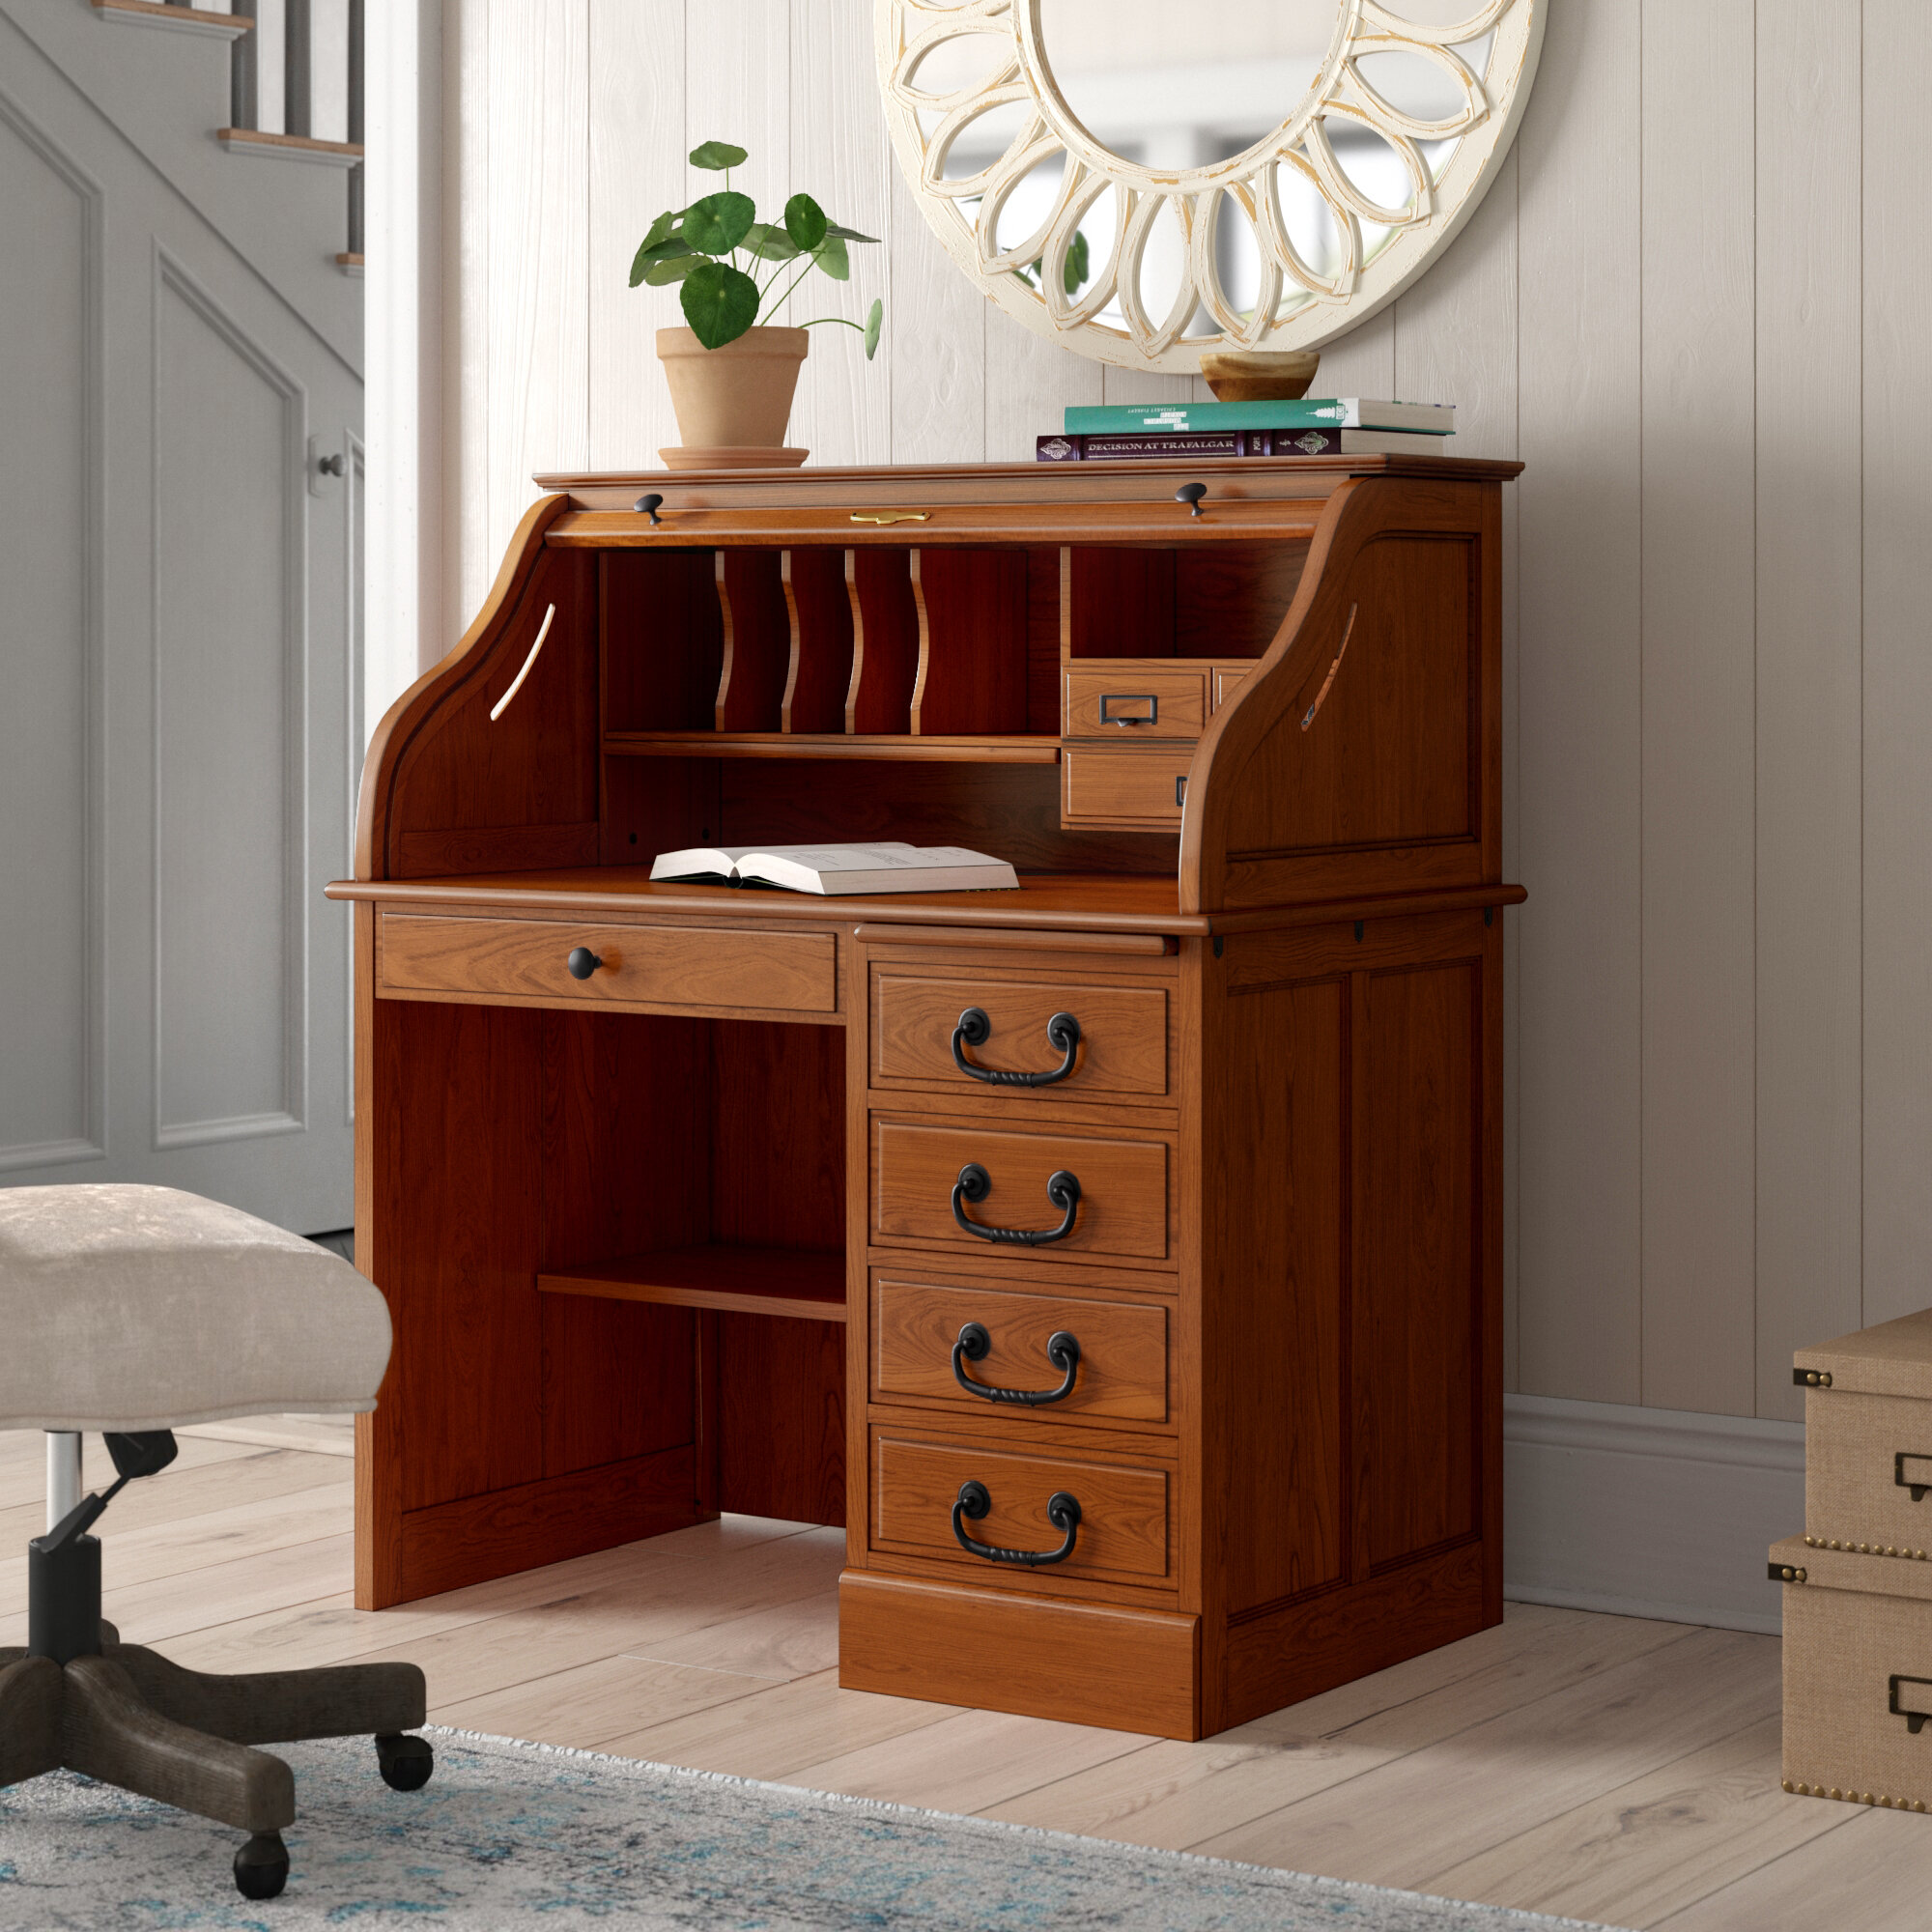 10 Modern Secretary Desks for Small Spaces